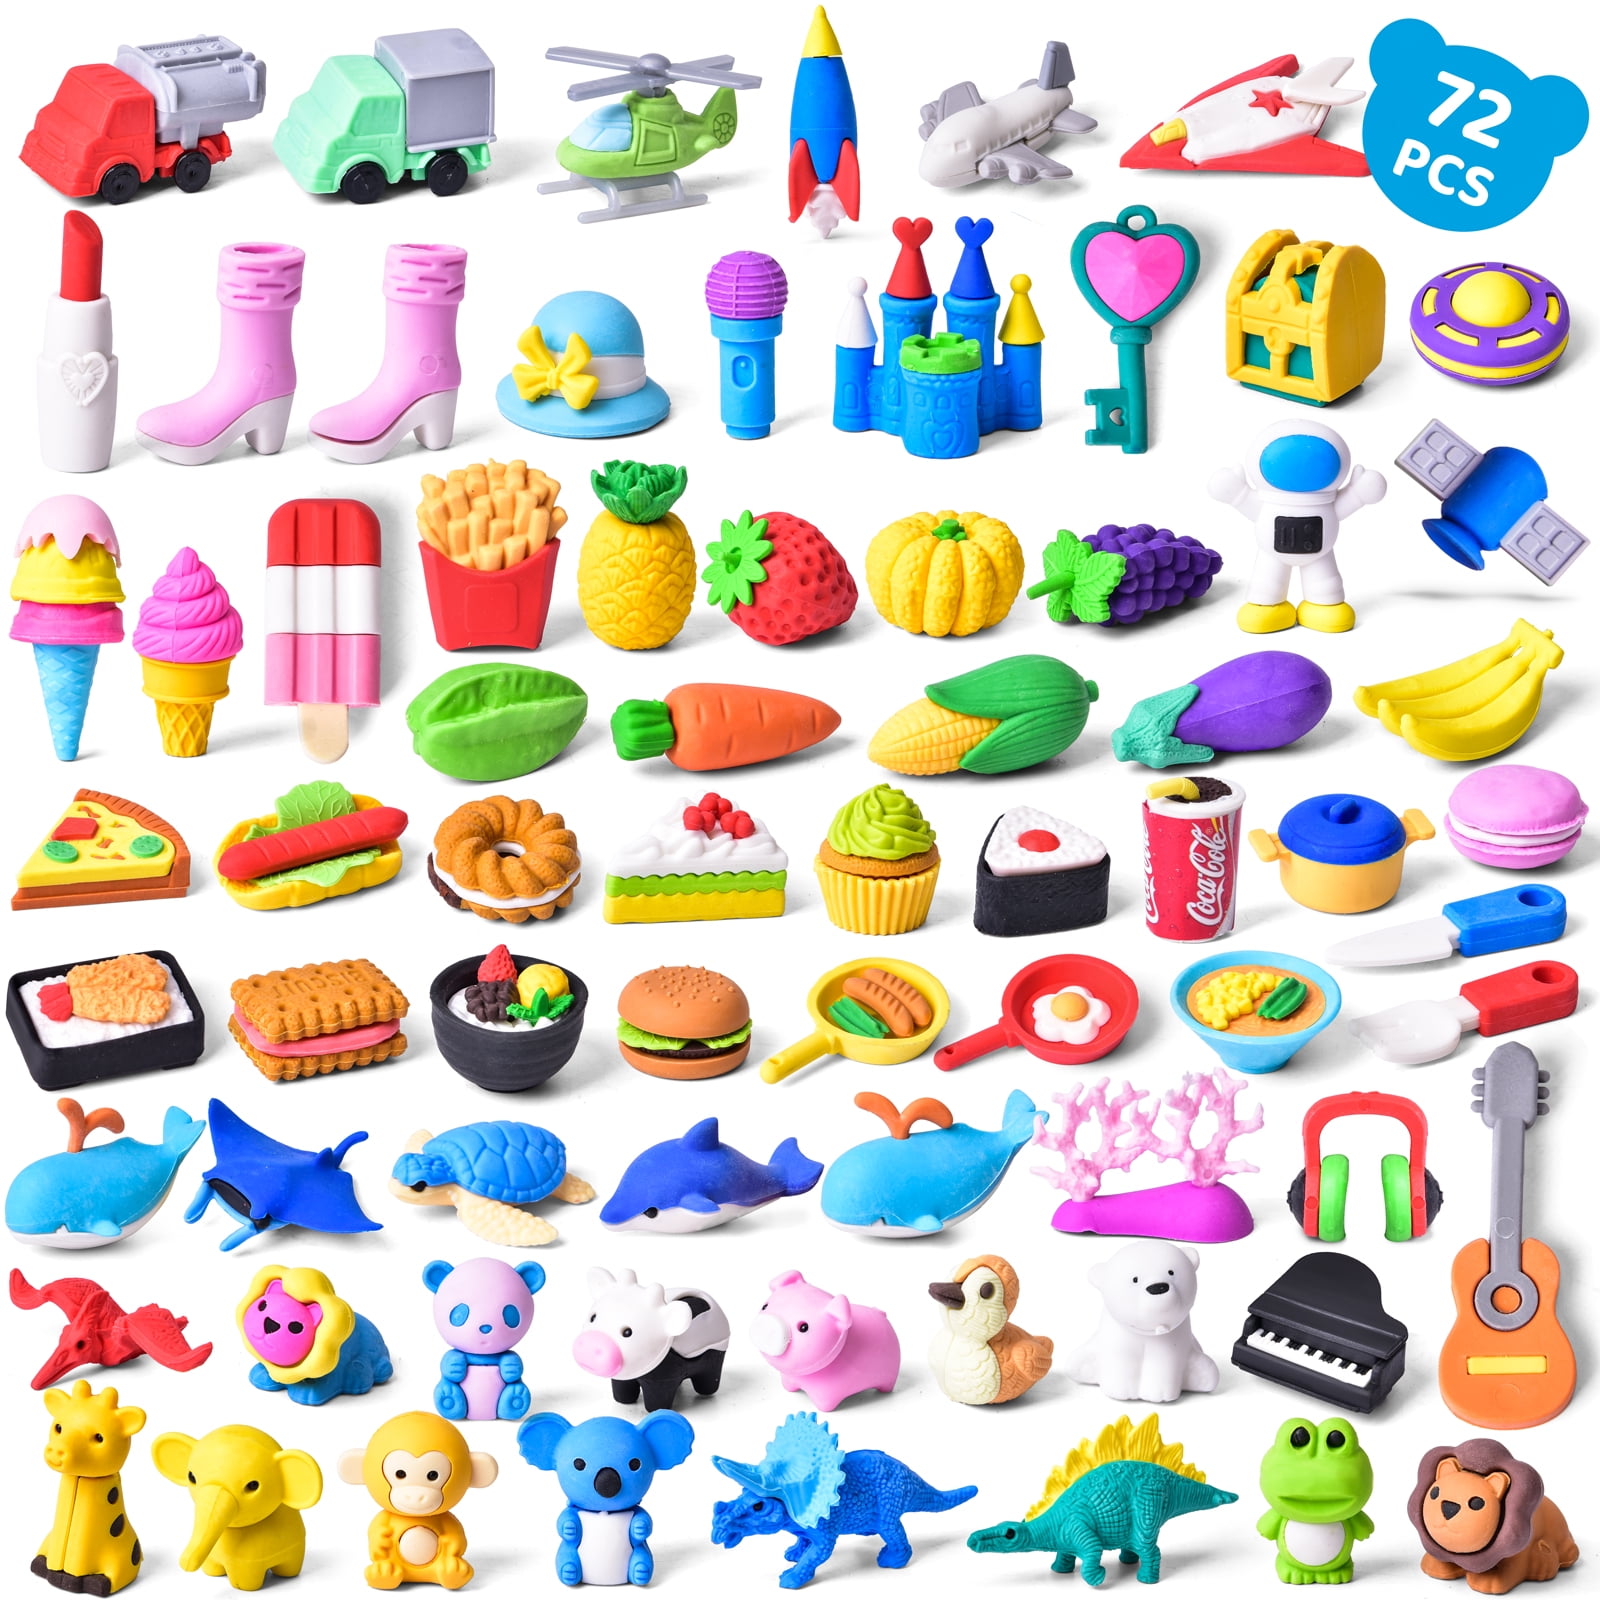 Fun Little Toys Confetti City 72 Pcs Assorted Themed Erasers,Mini Fun ...